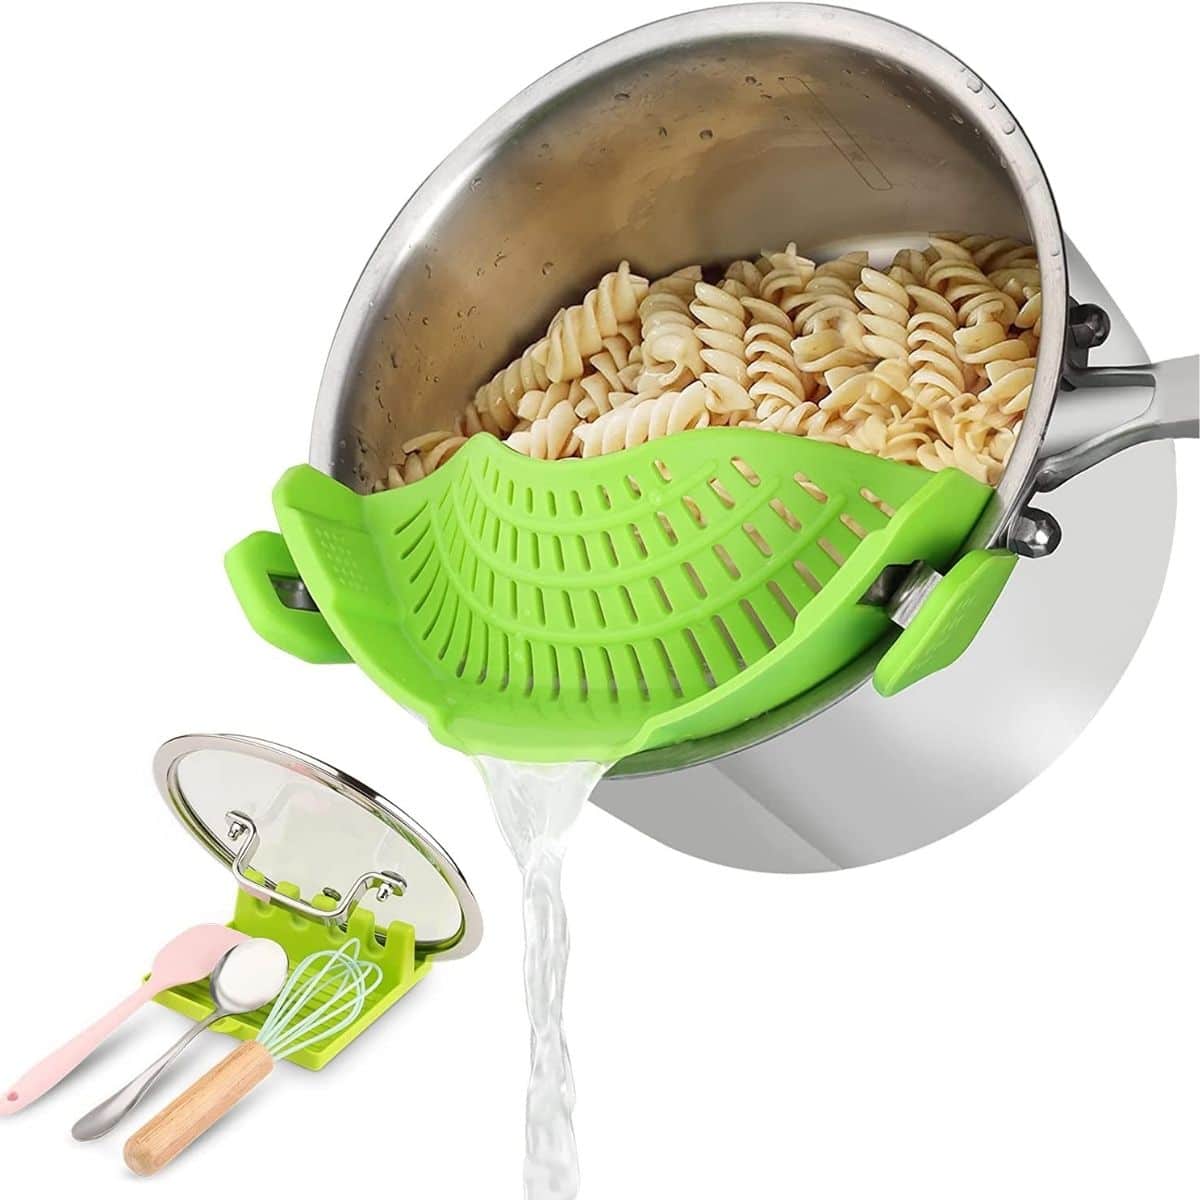 Green plastic kitchen gadget on po full of pasta